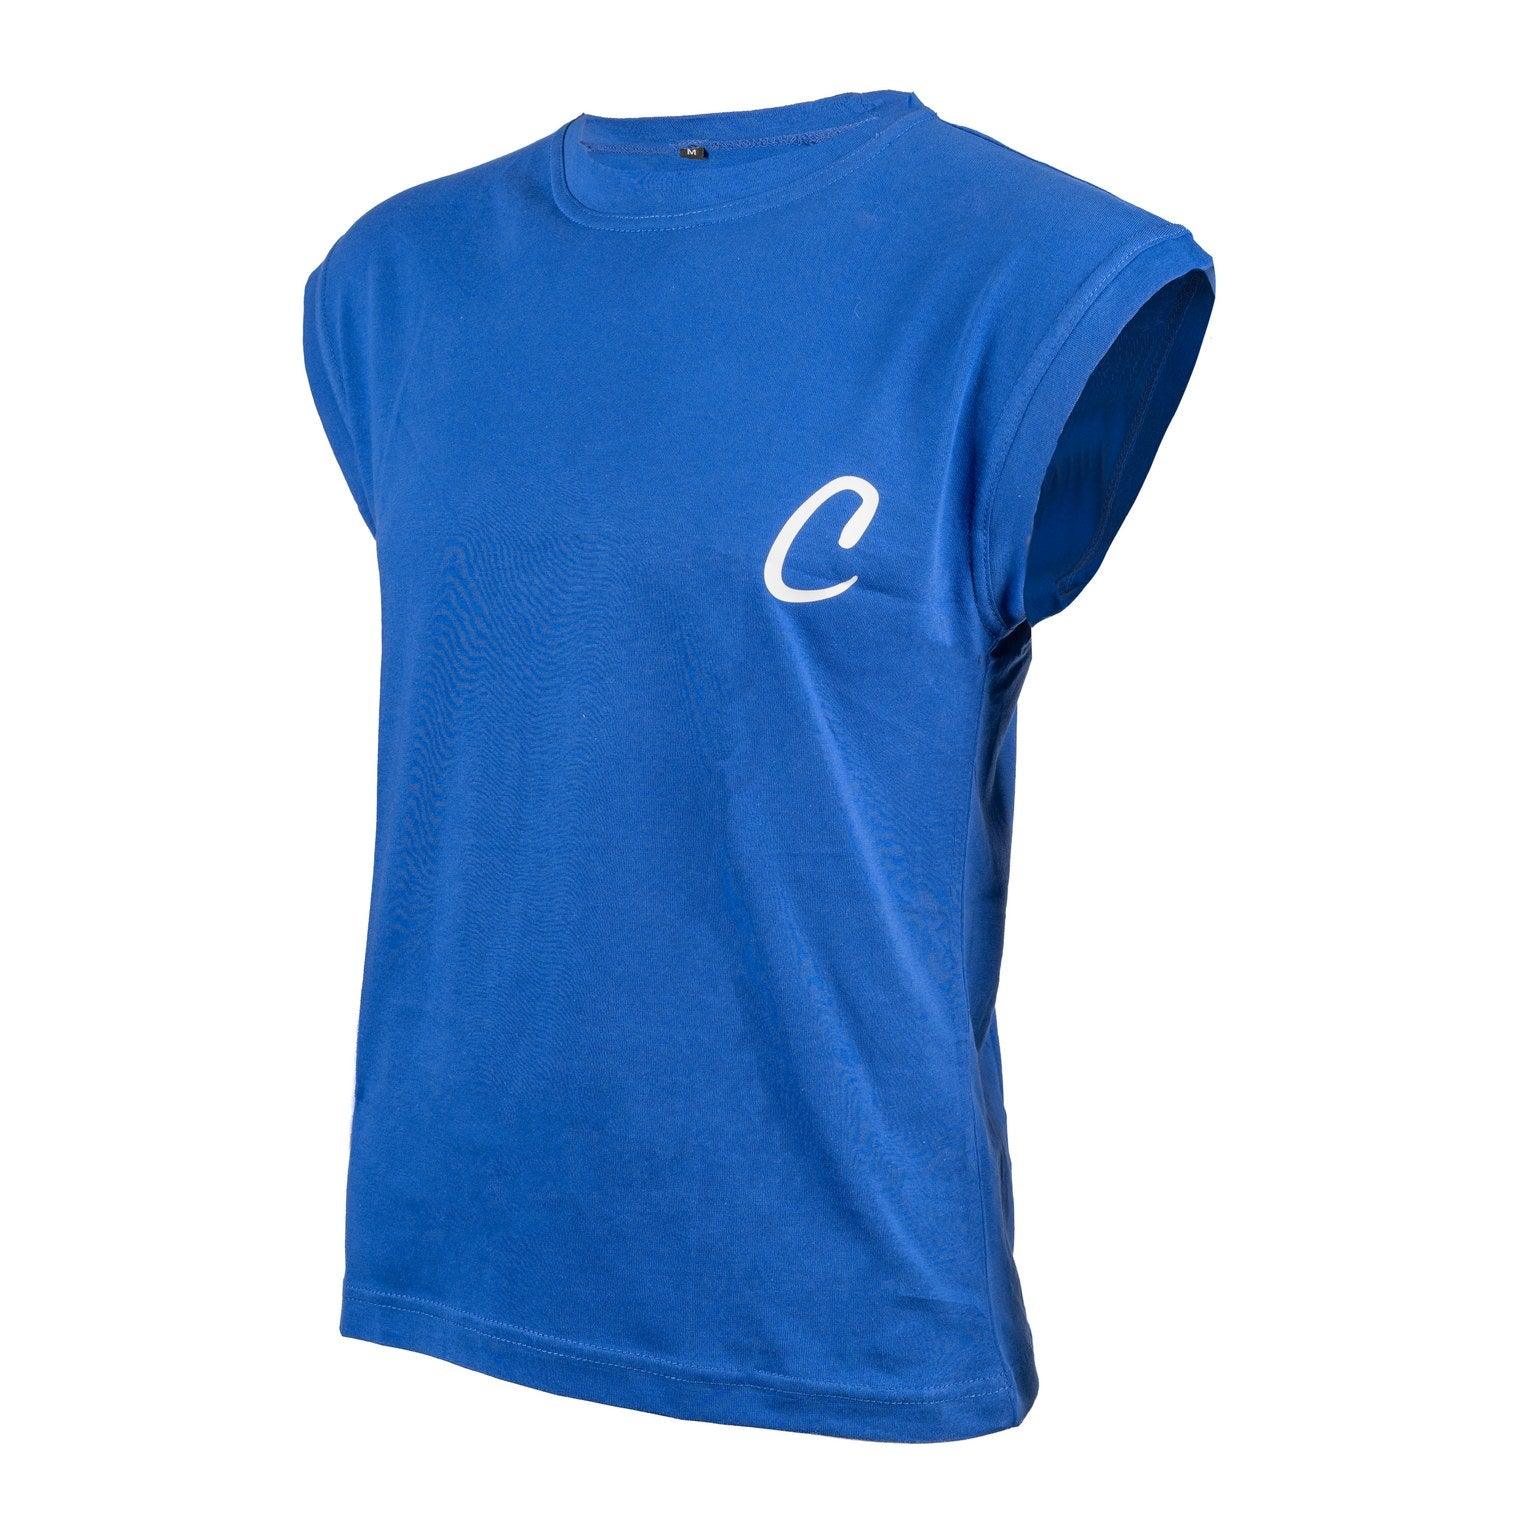 Sleeveless shirt "C" - Crest - PFG